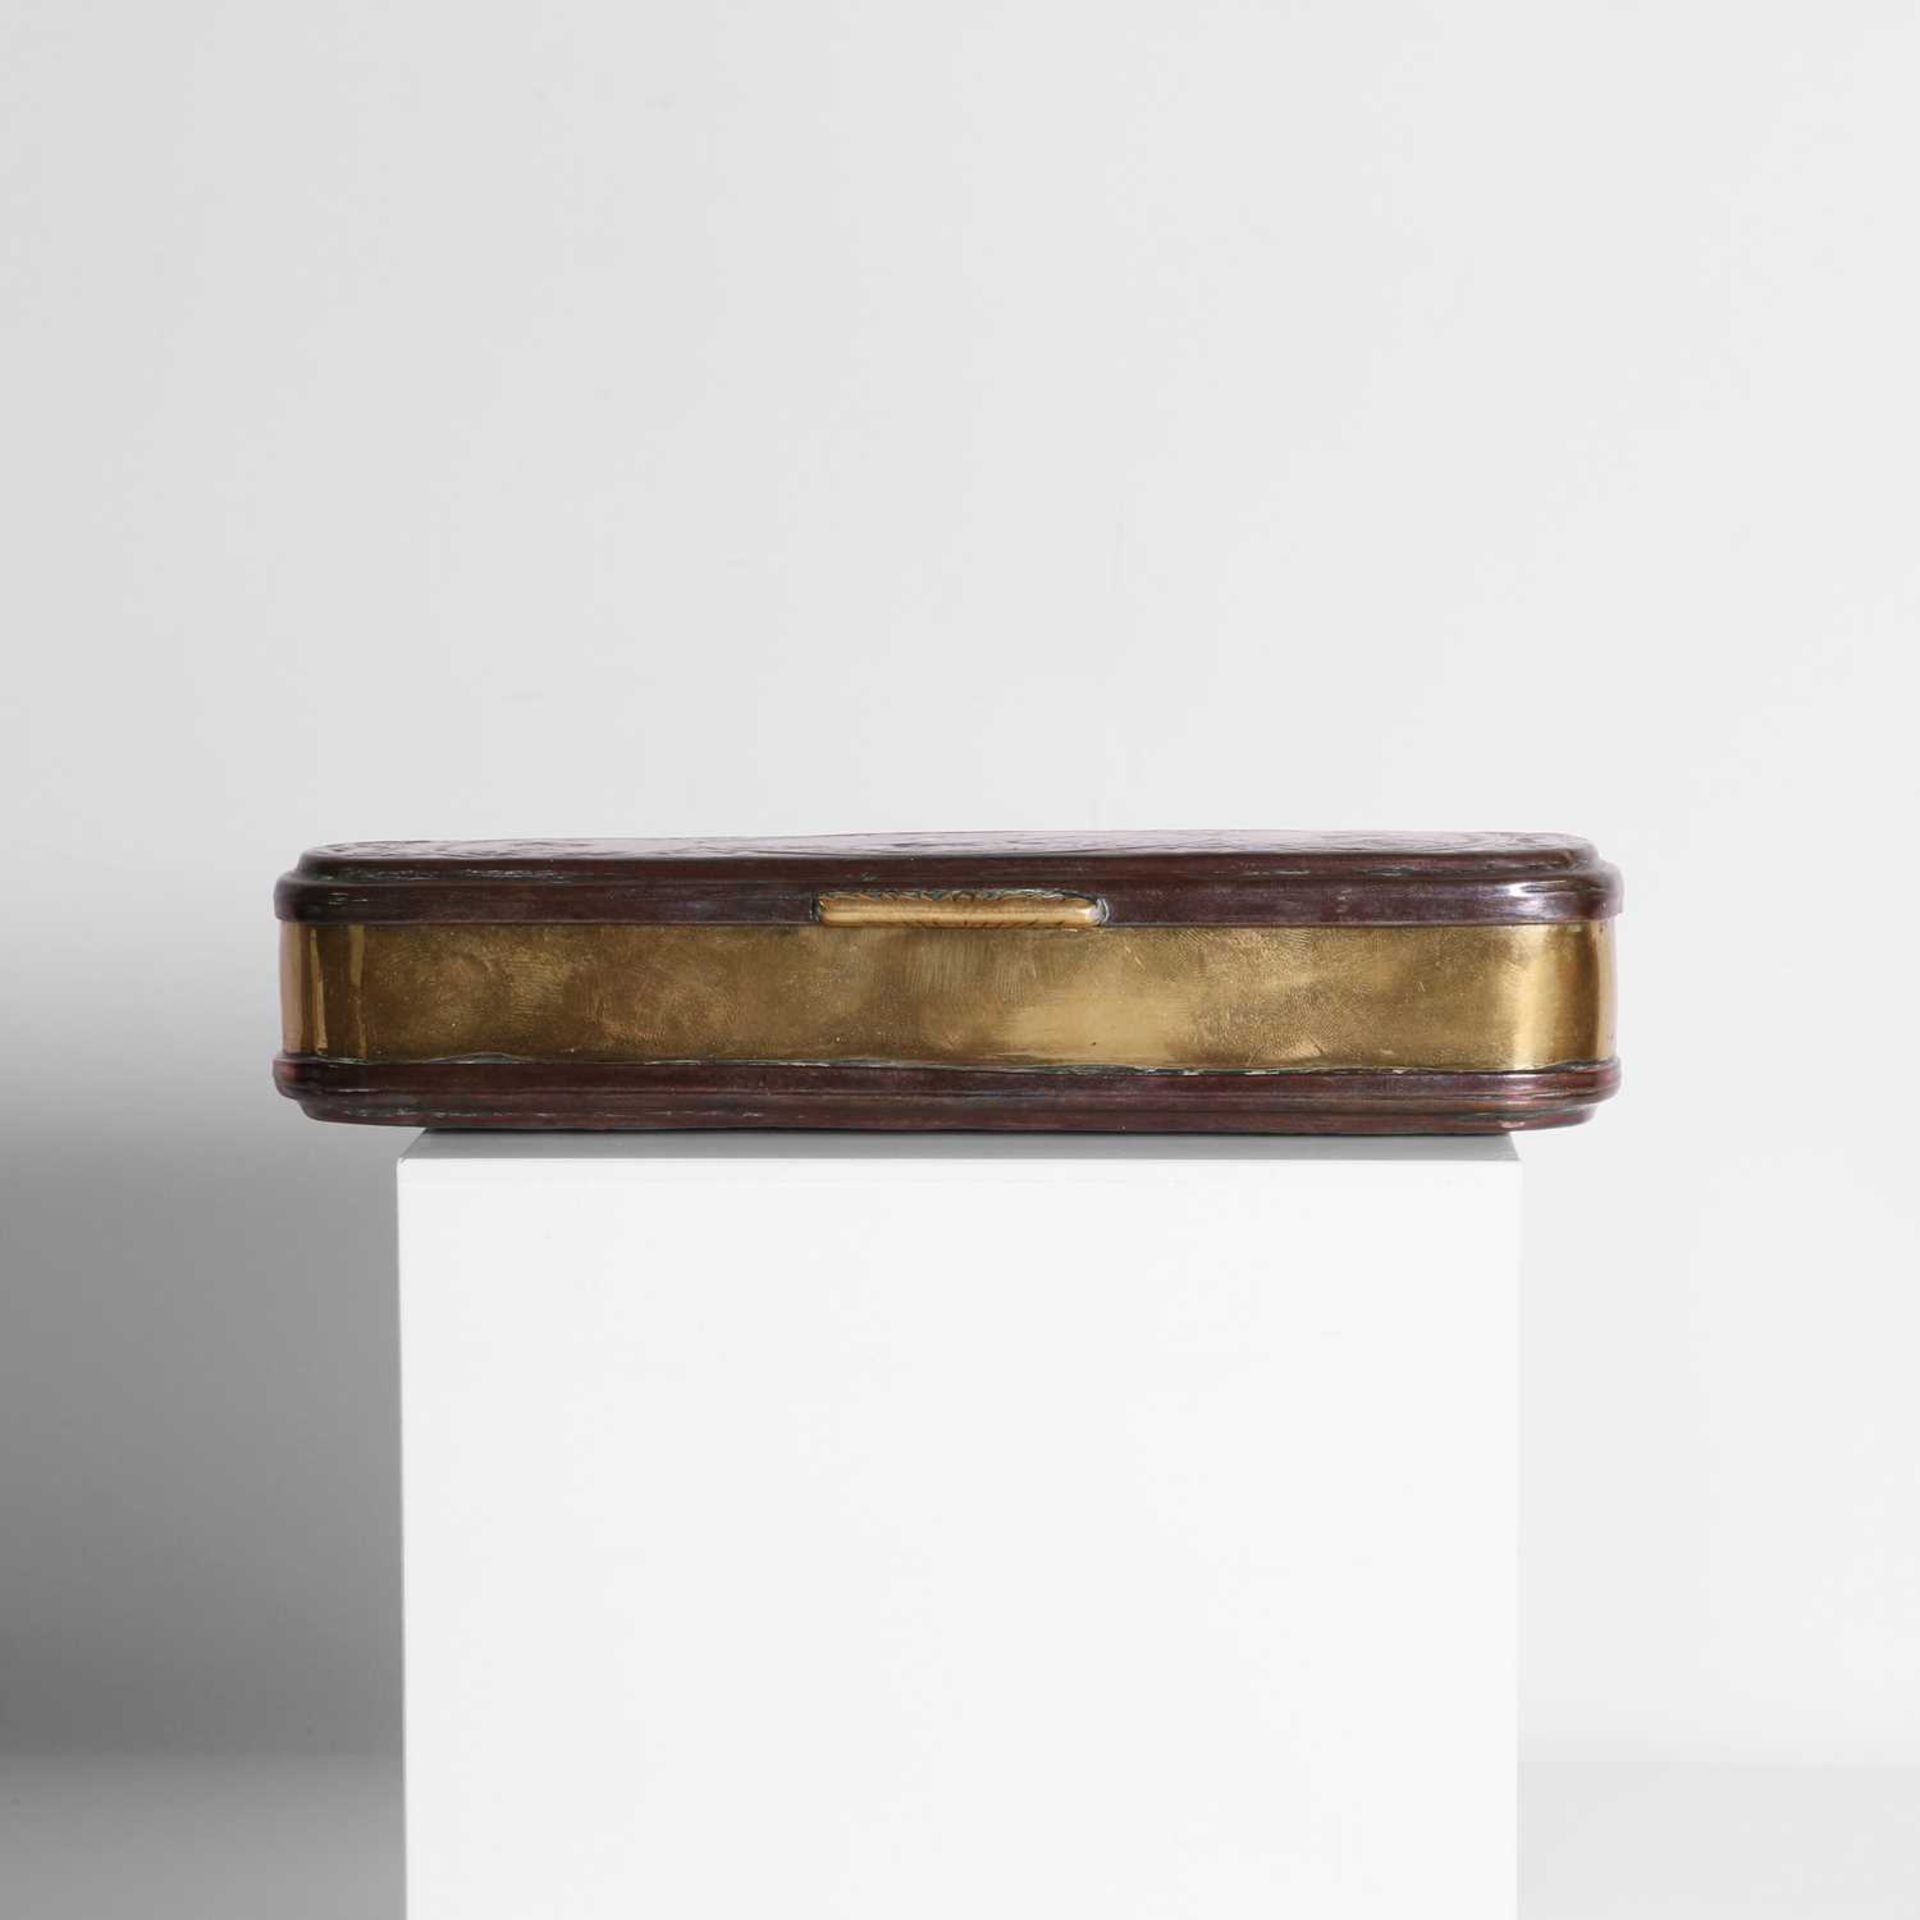 A copper and brass tobacco box, - Image 5 of 6